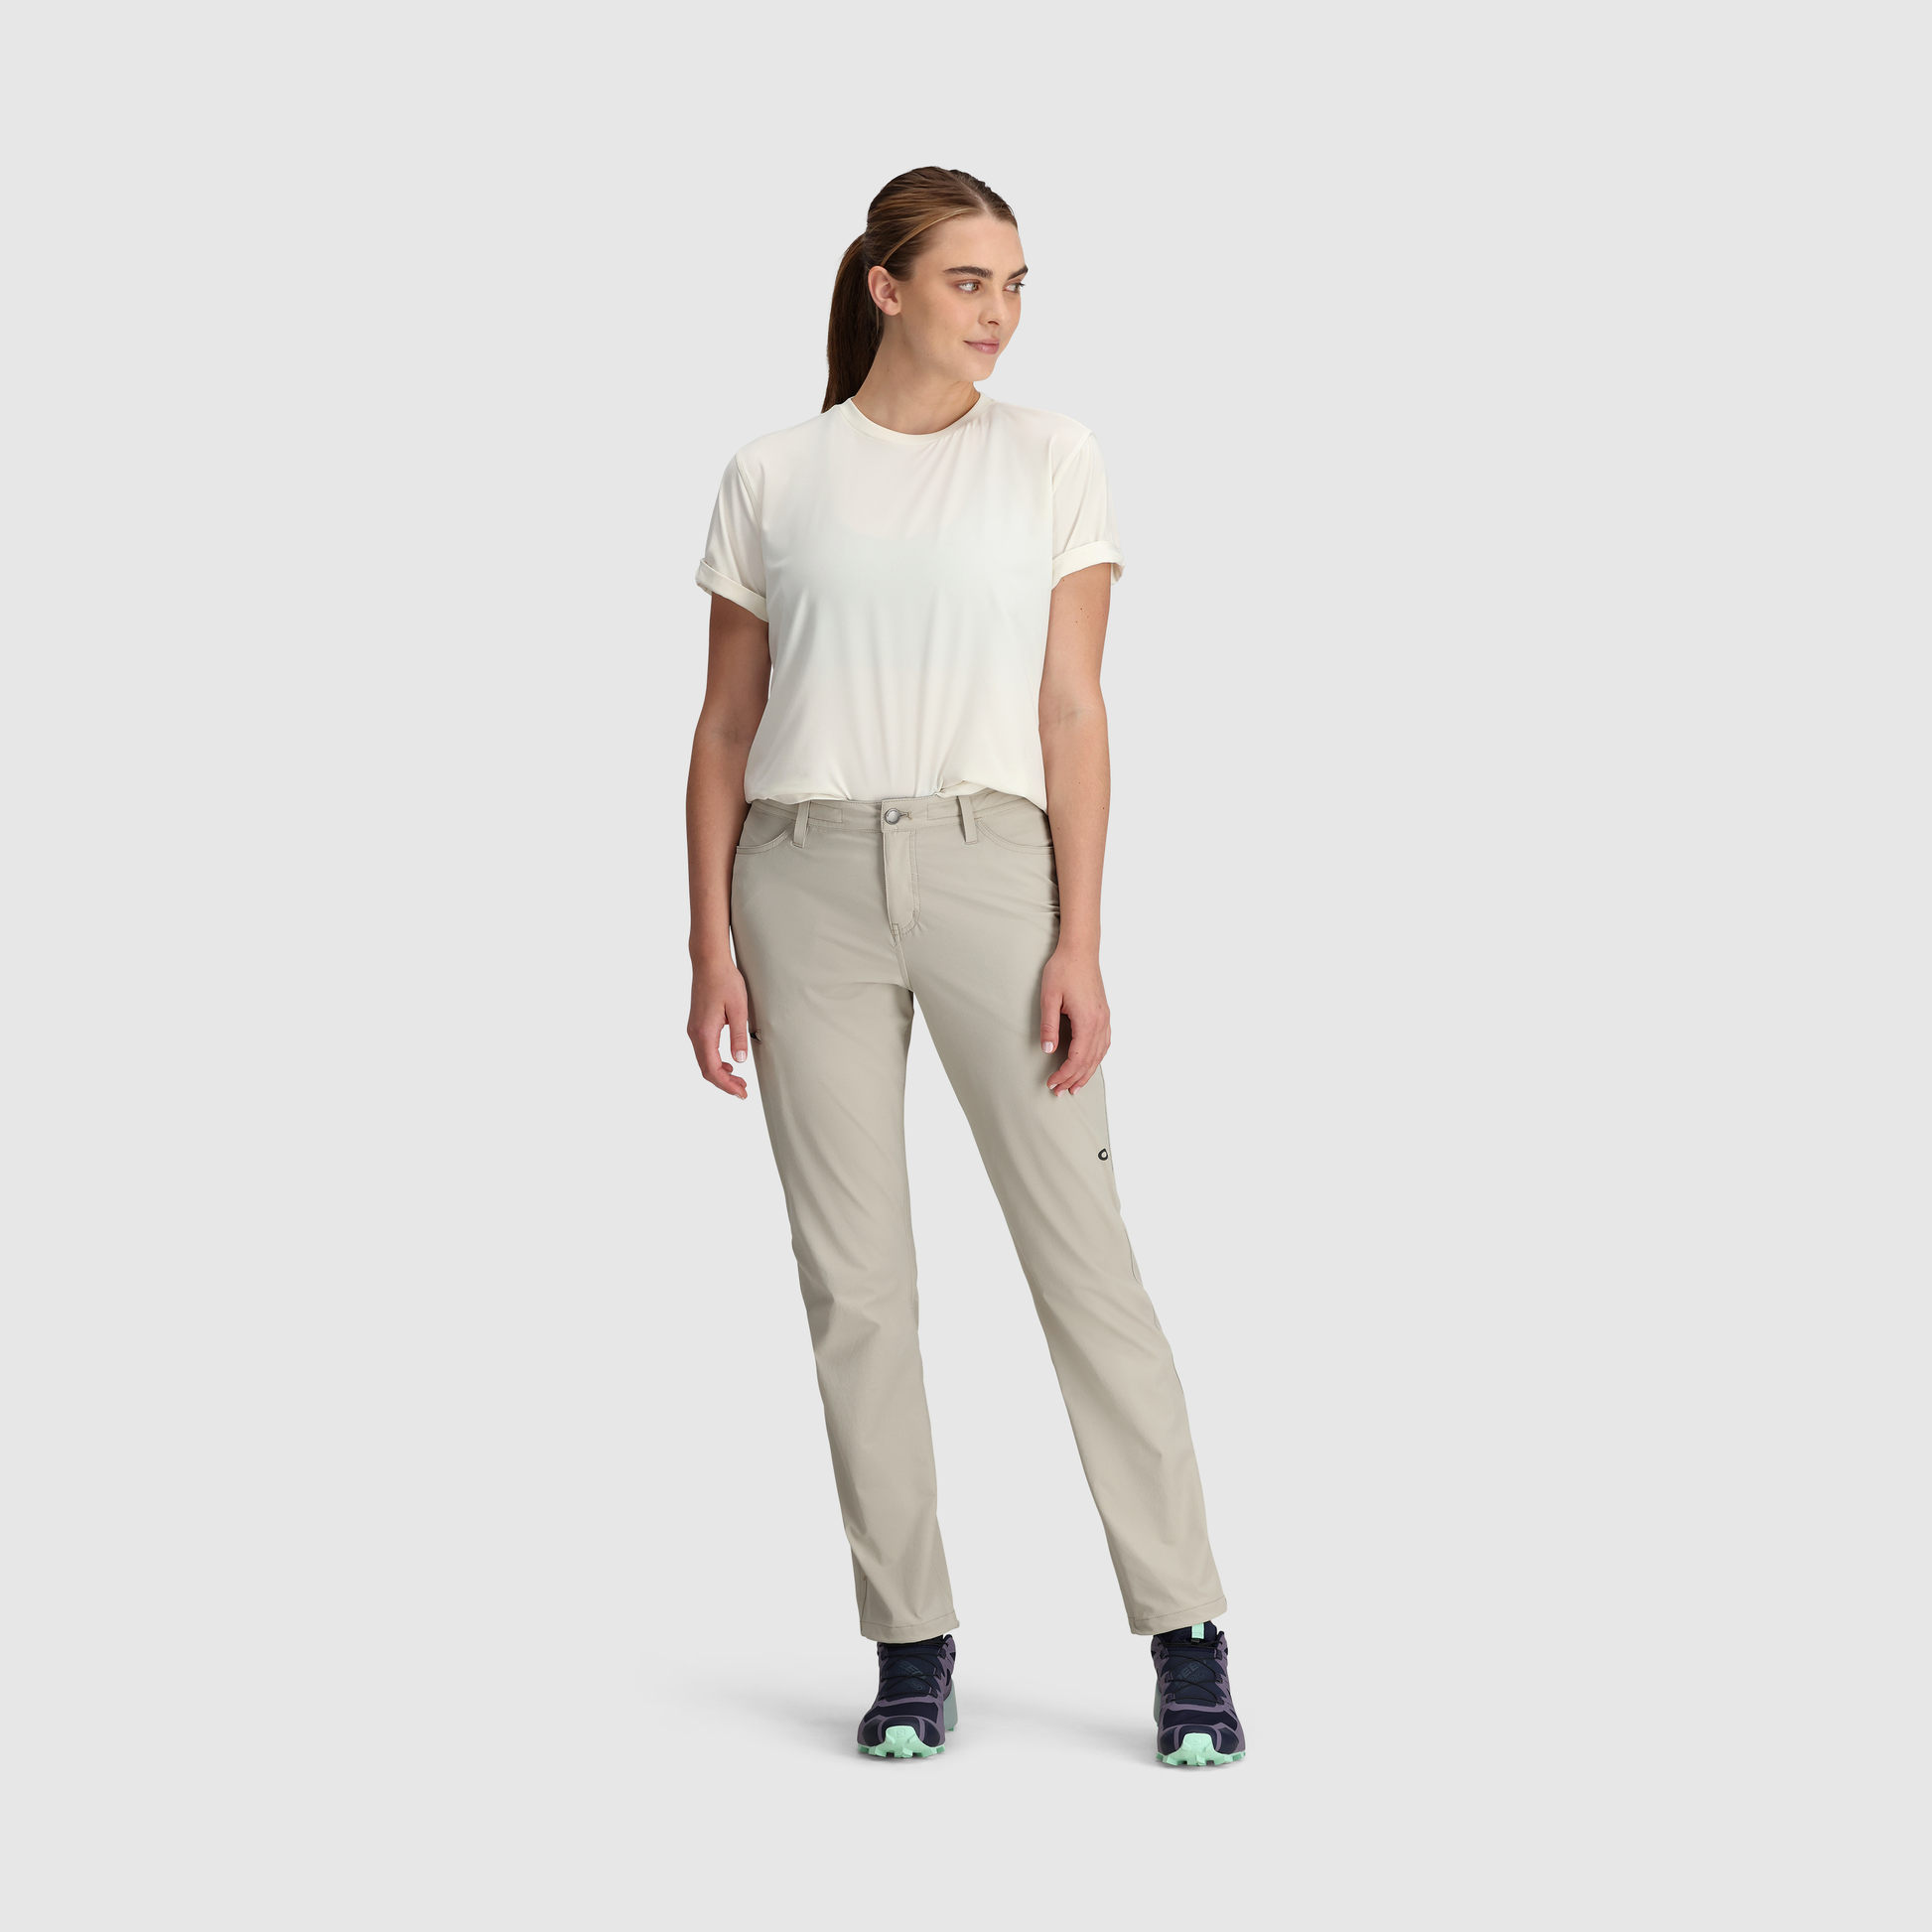 Women's Ferrosi Pants | Outdoor Research